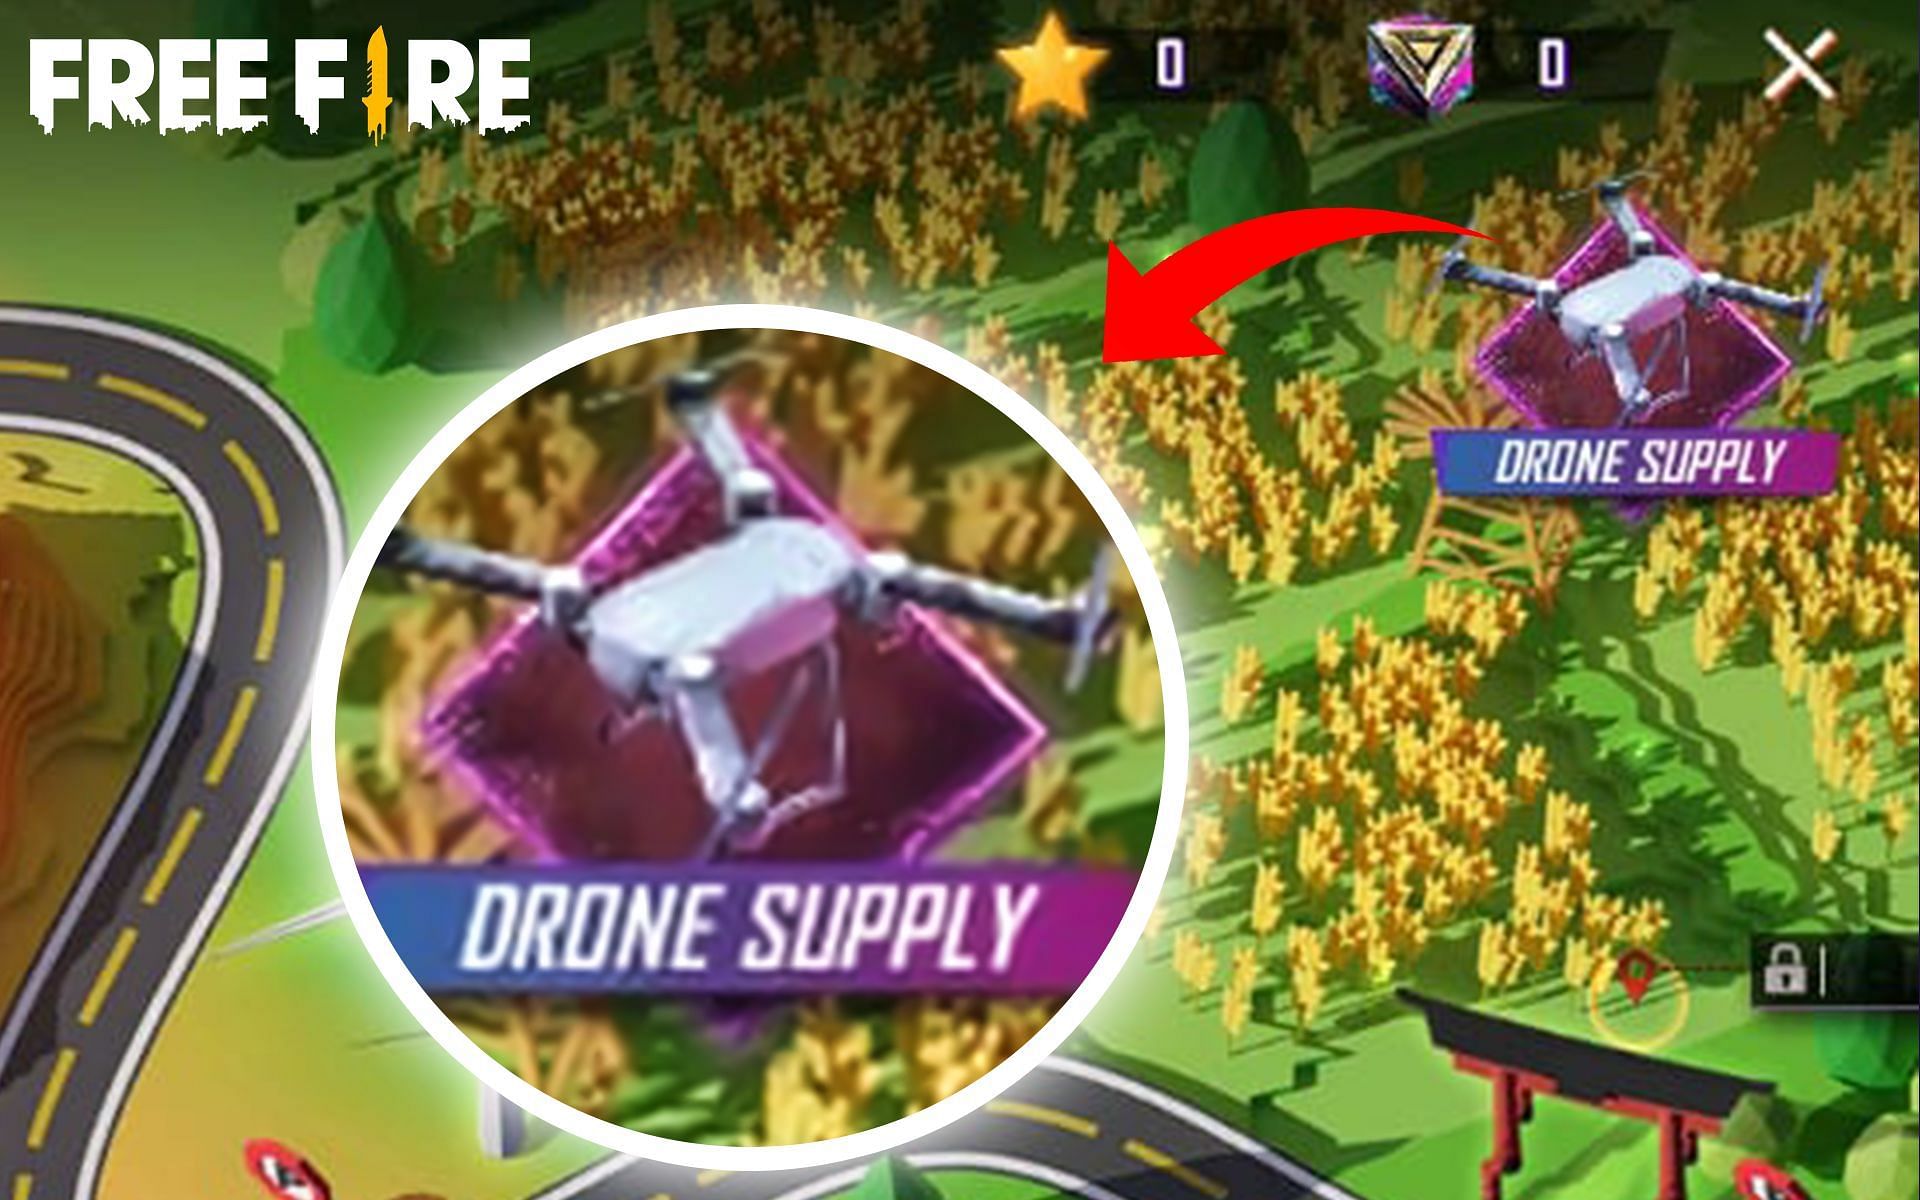 The Drone Supply logo is on the top right corner (Image via Sportskeeda)